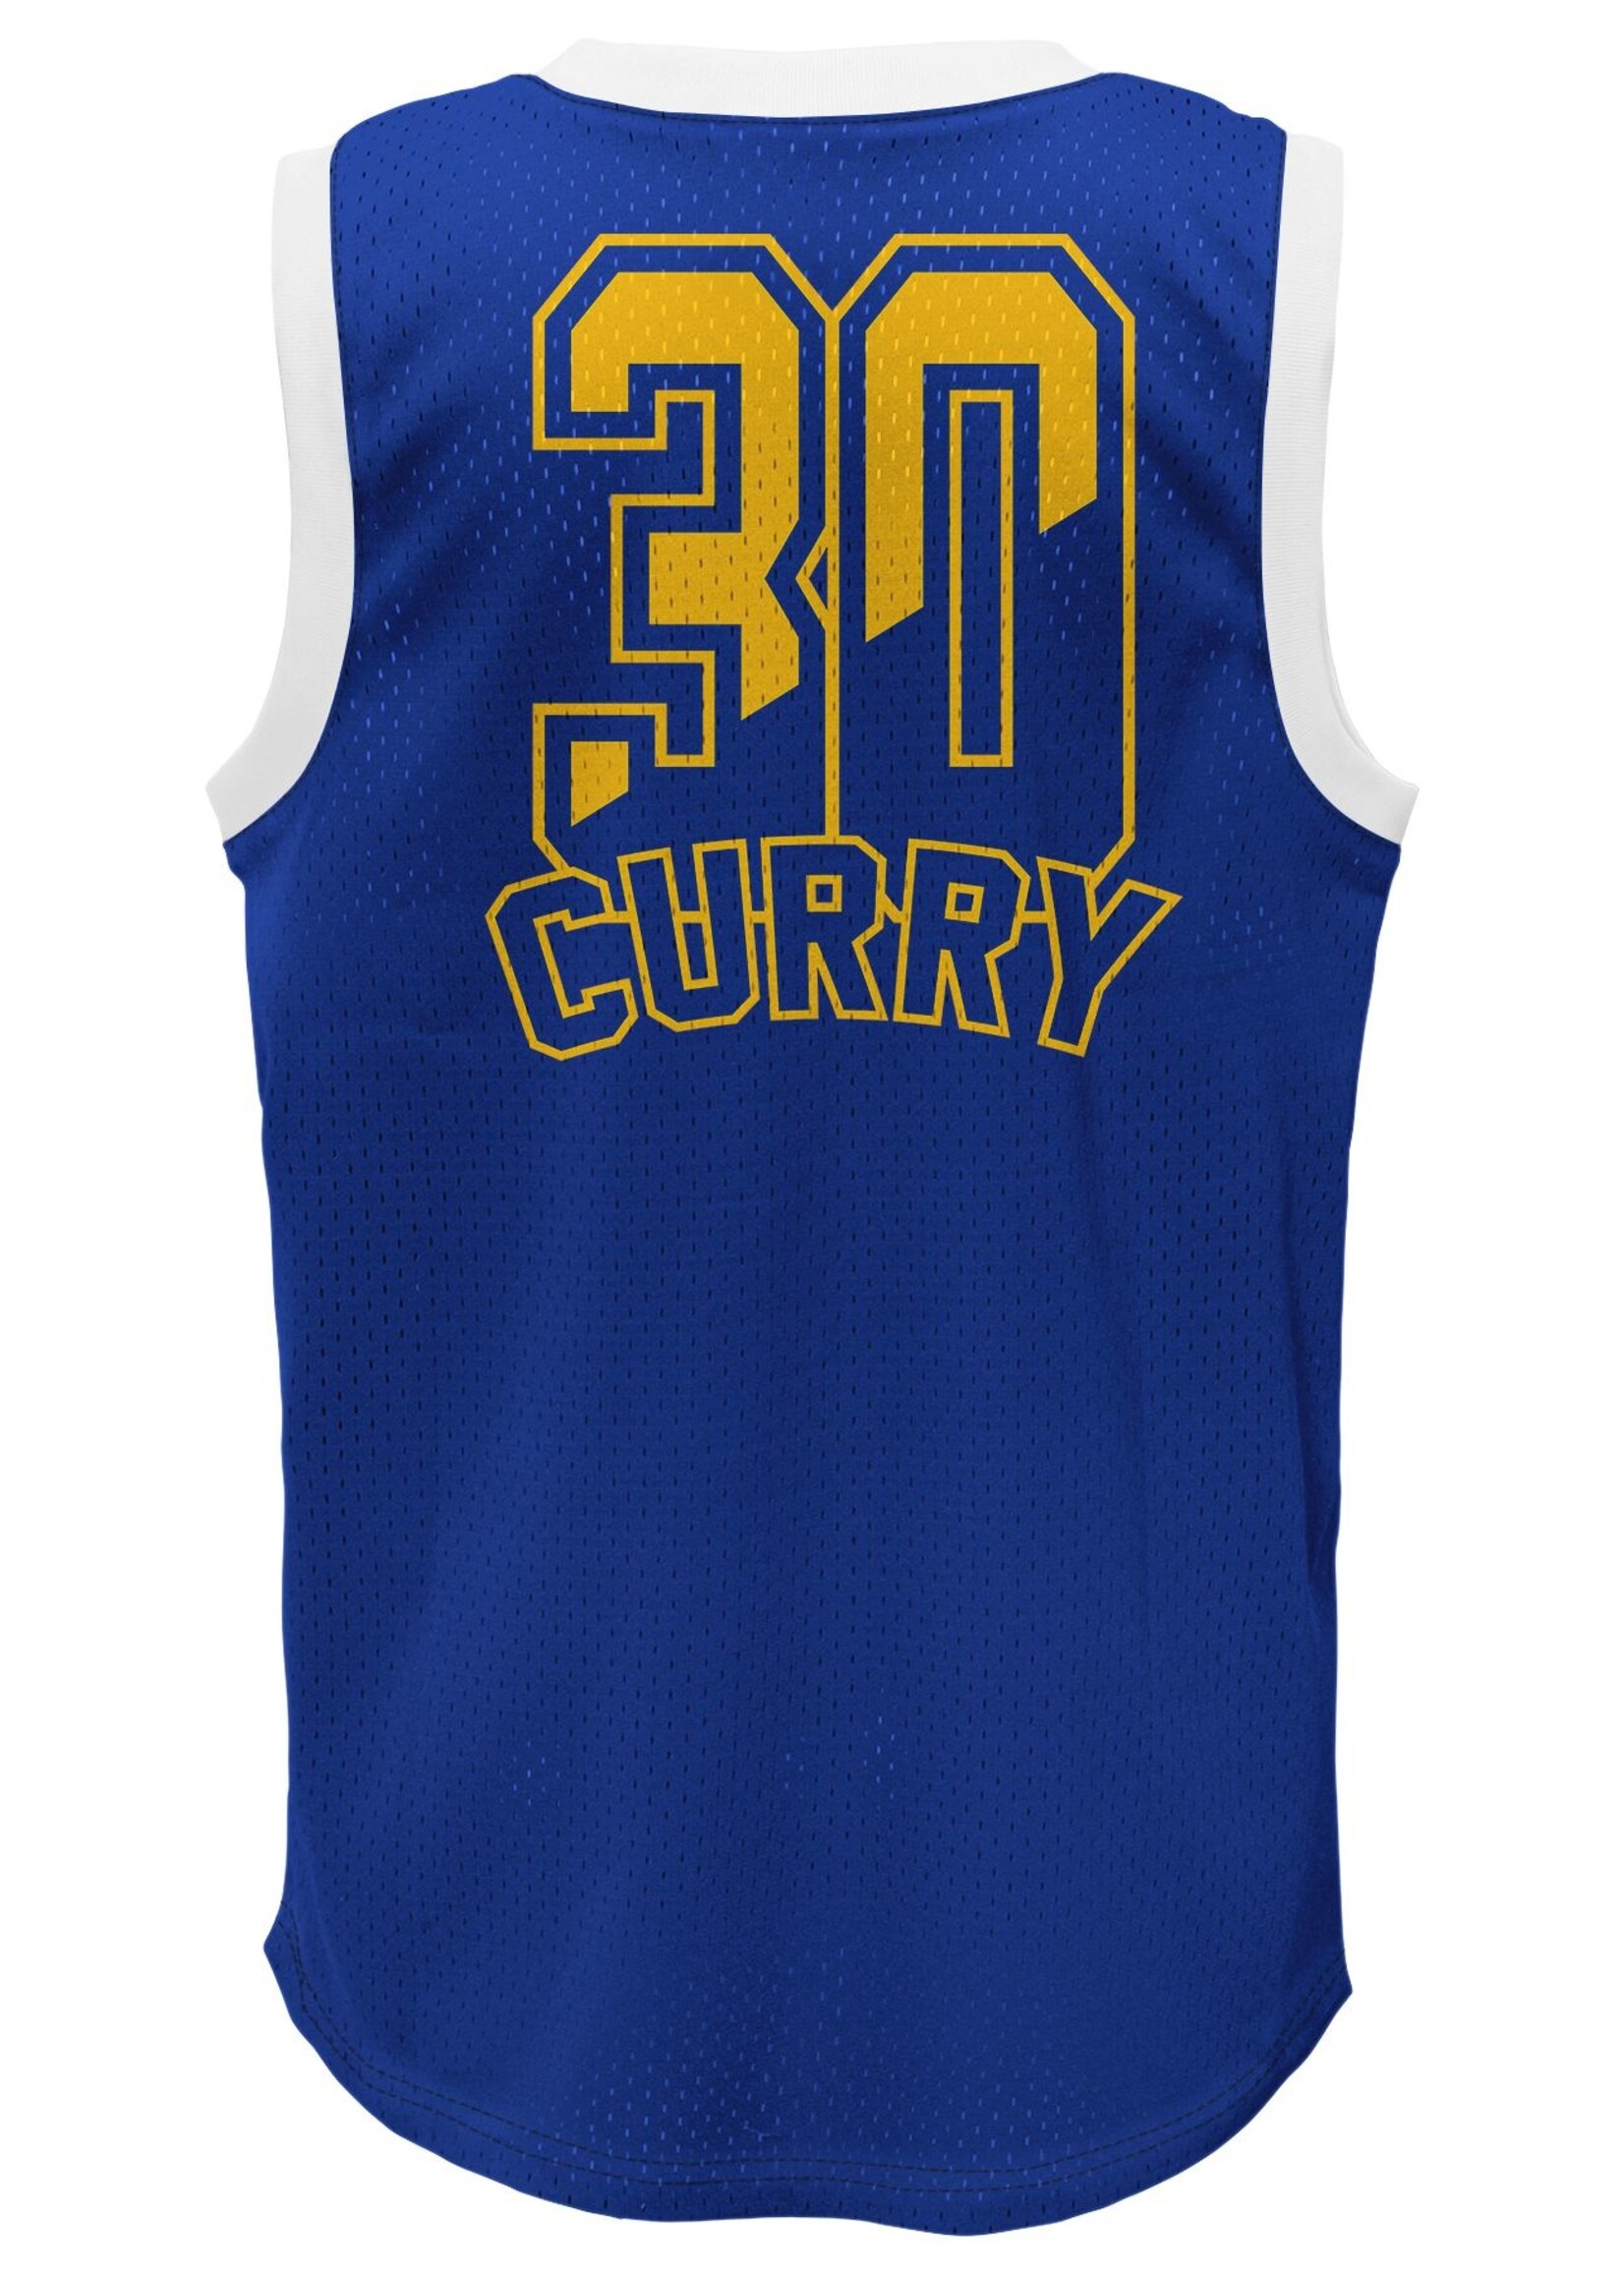 Outerstuff NBA Steph Curry Trikot Blau (Brustlogo)